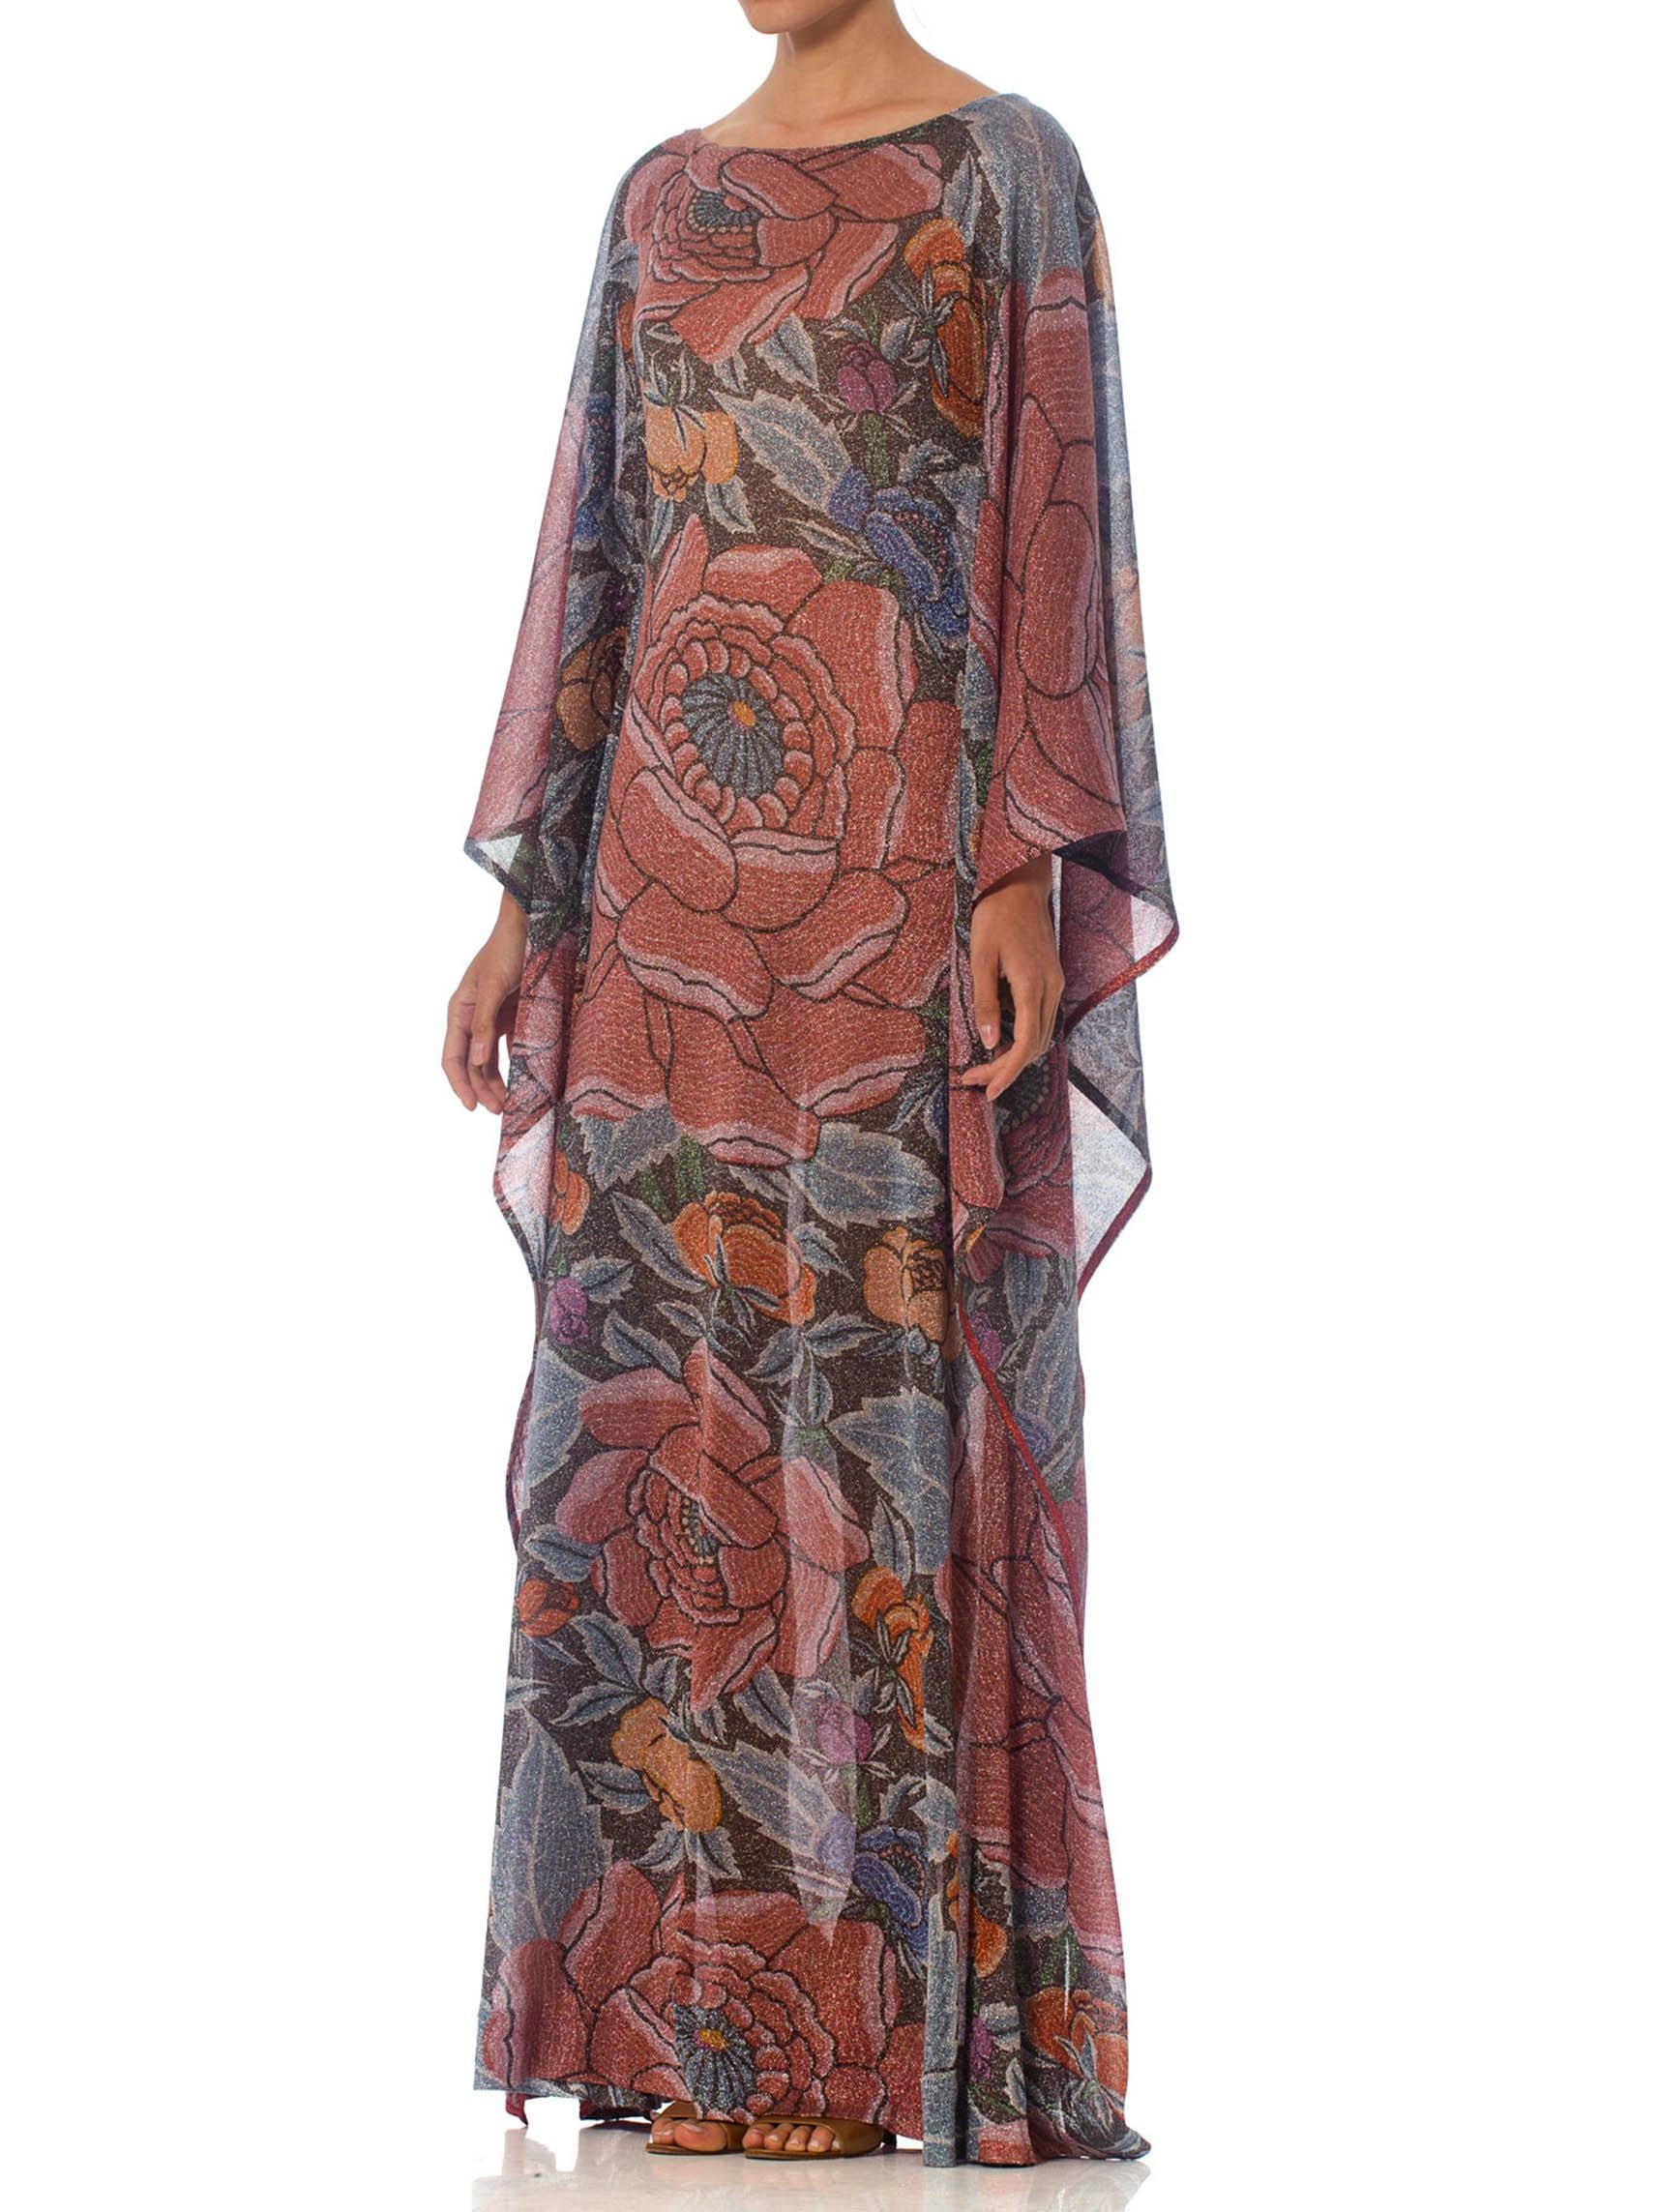 1970S MISSONI Metallic Rayon Blend Knit Rare & Collectible Asian Floral Kaftan For Sale 1